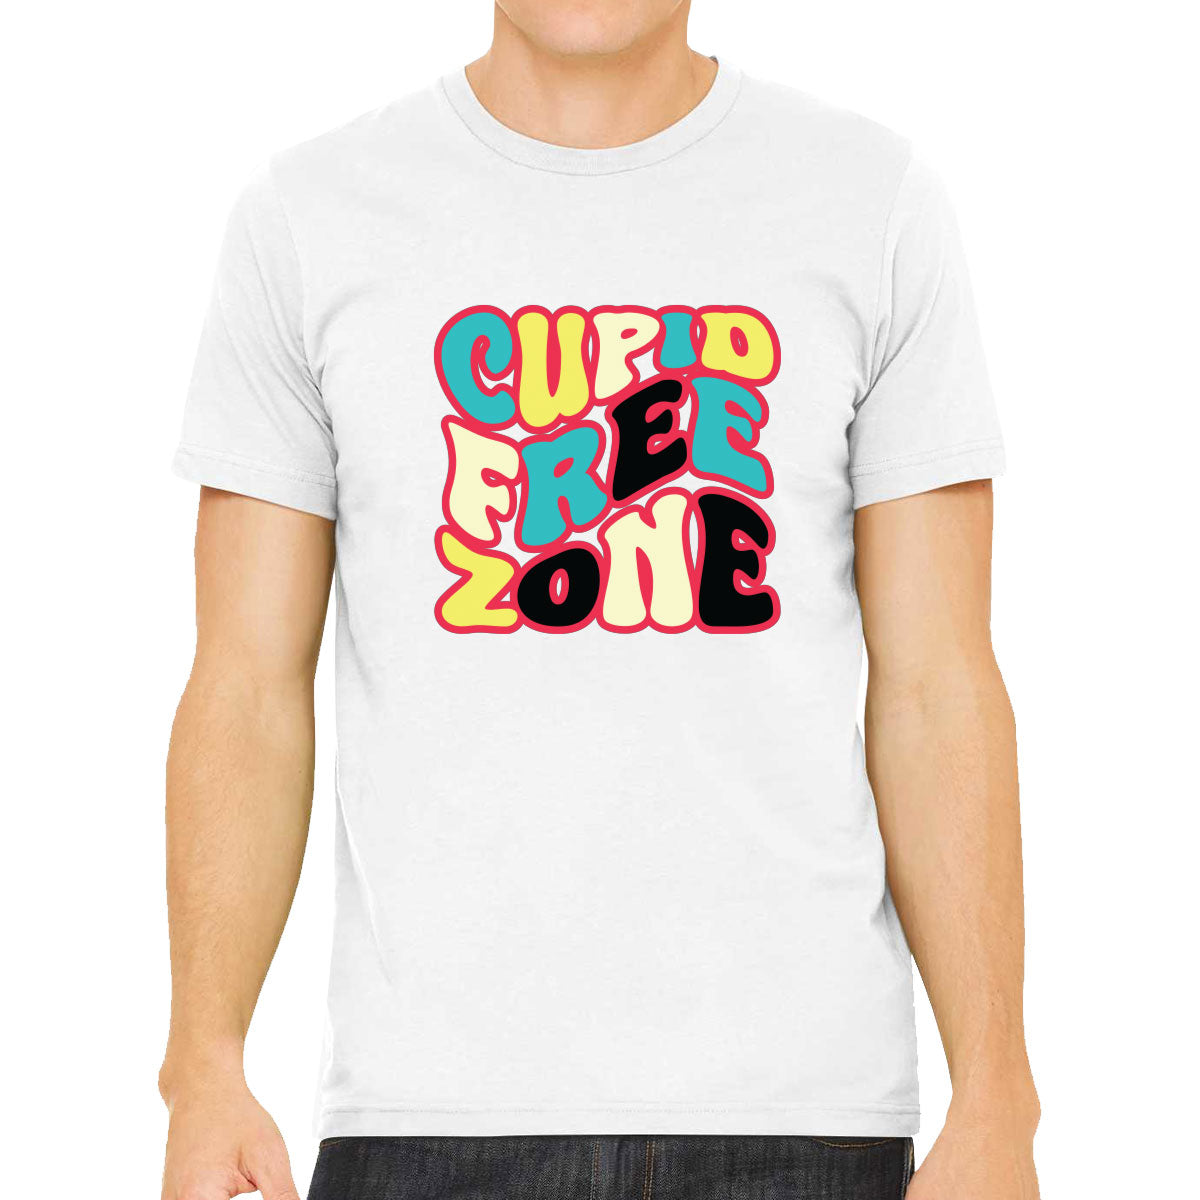 Cupid Free Zone Men's T-shirt